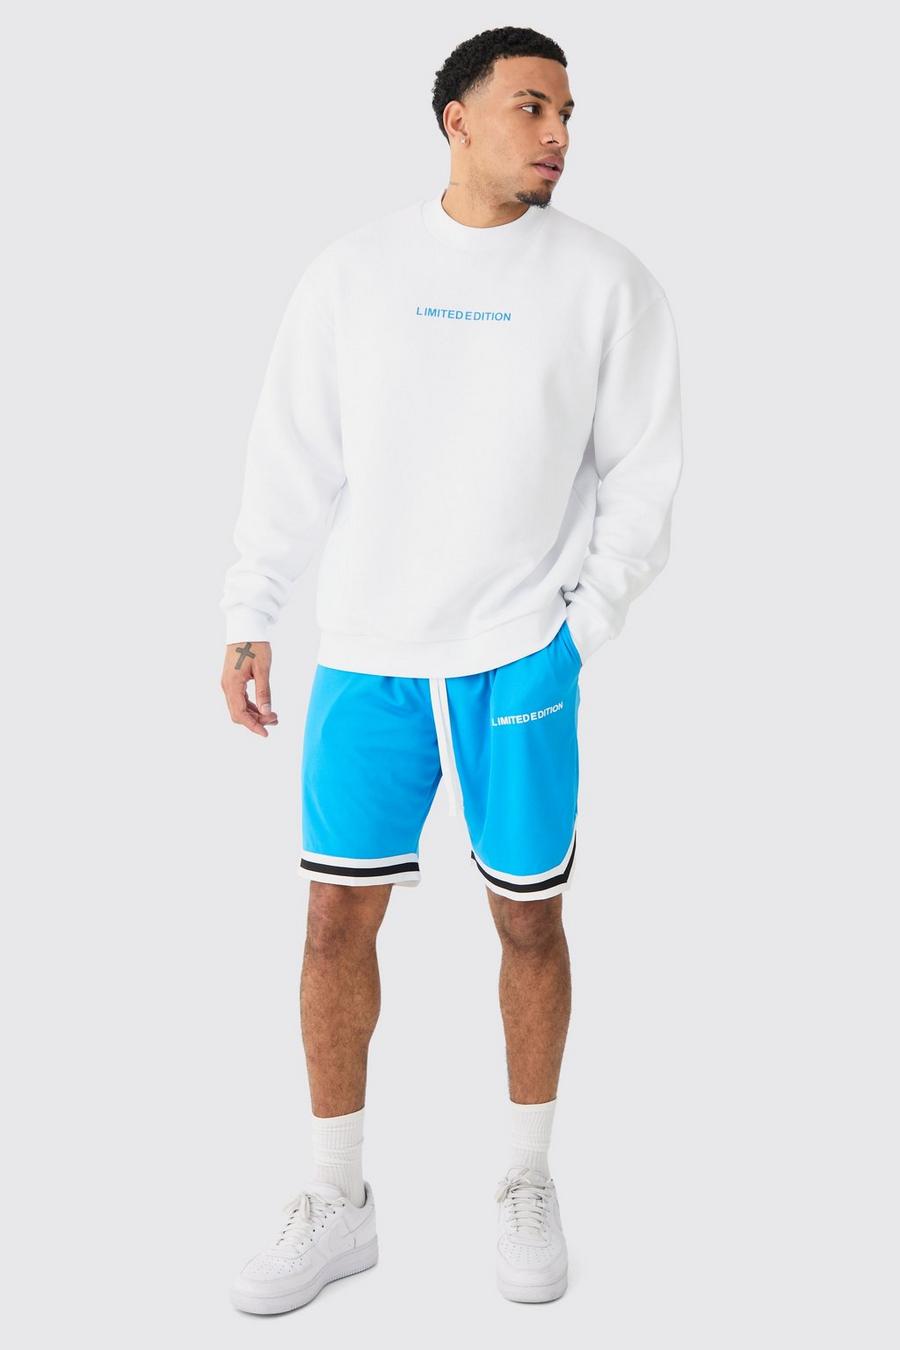 Oversize Limited Edition Sweatshirt und Basketball Mesh Shorts, White